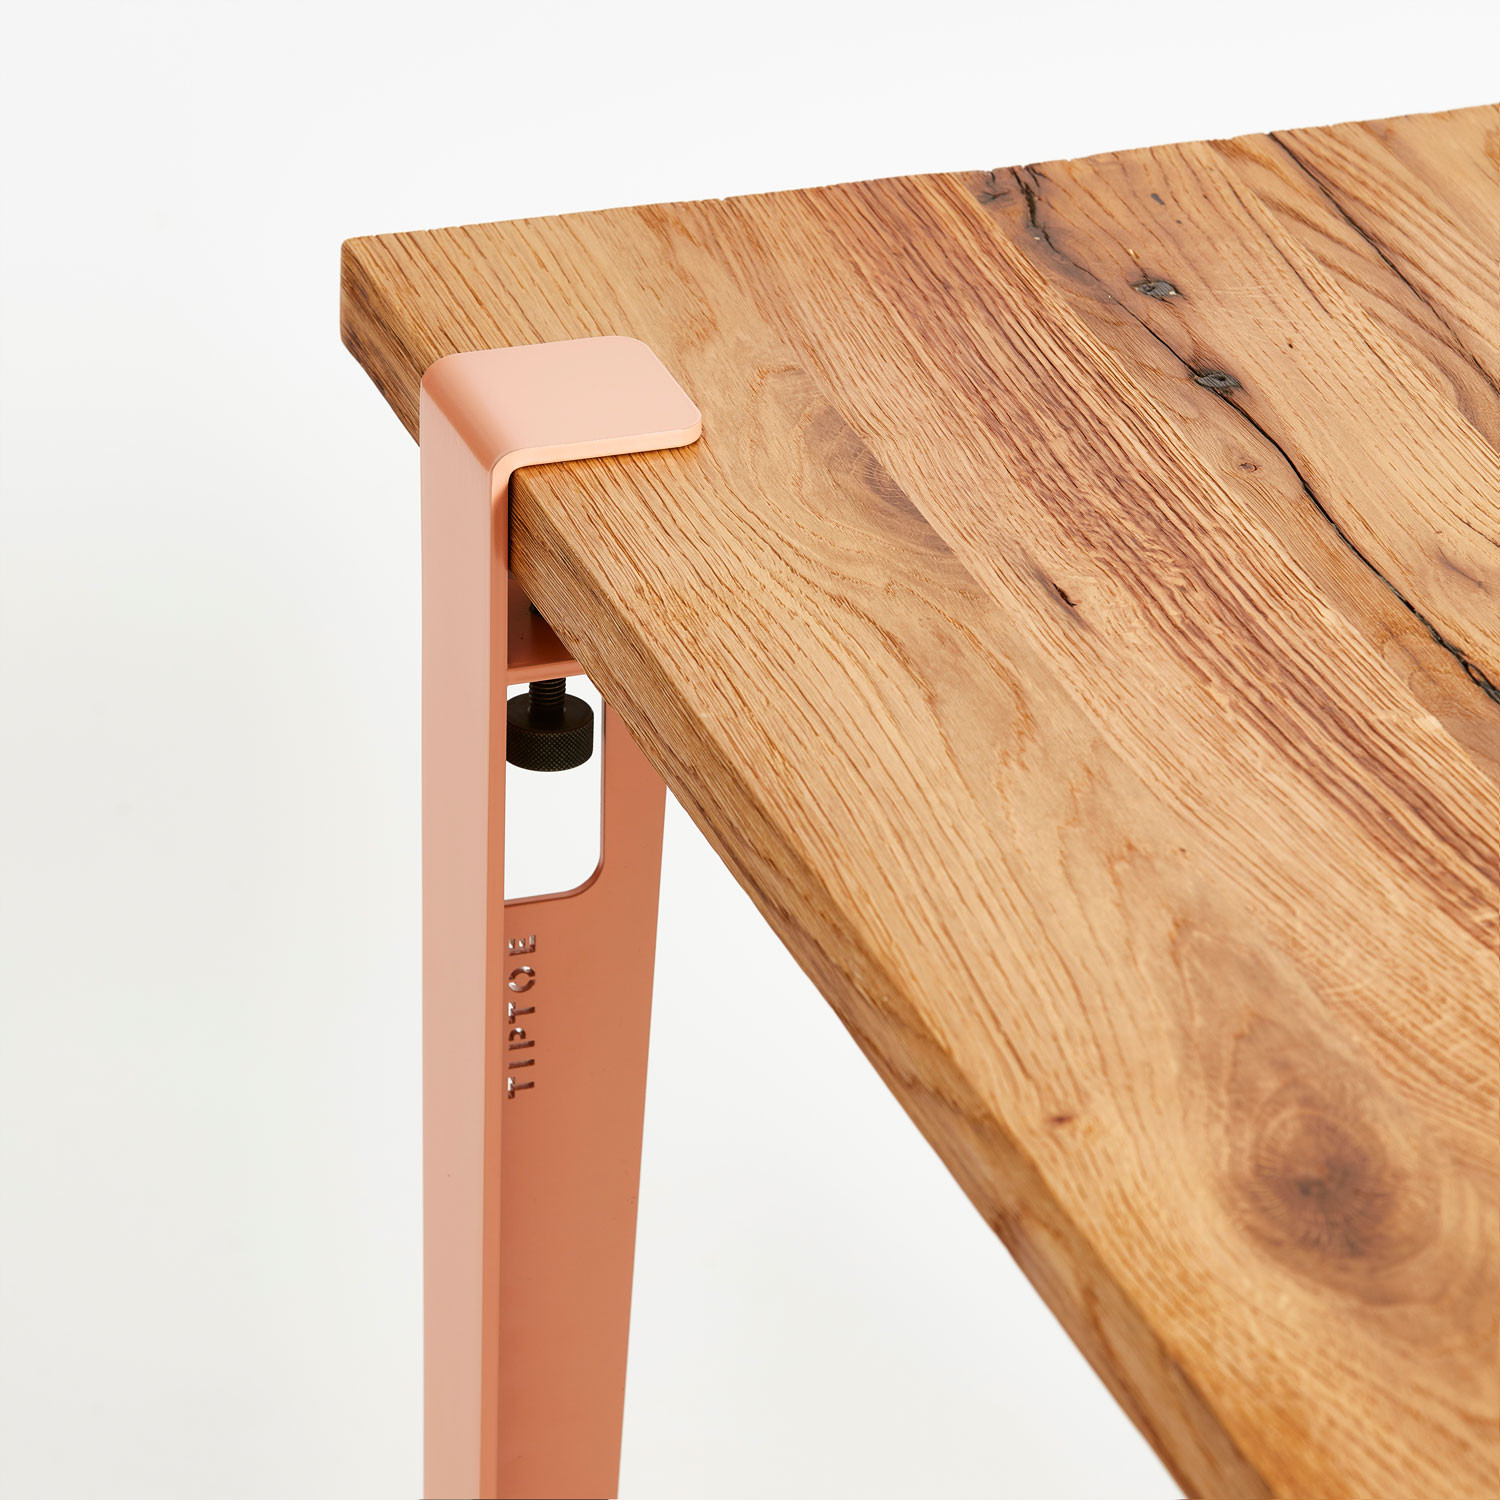 TIPTOE reclaimed wood desk top with table leg